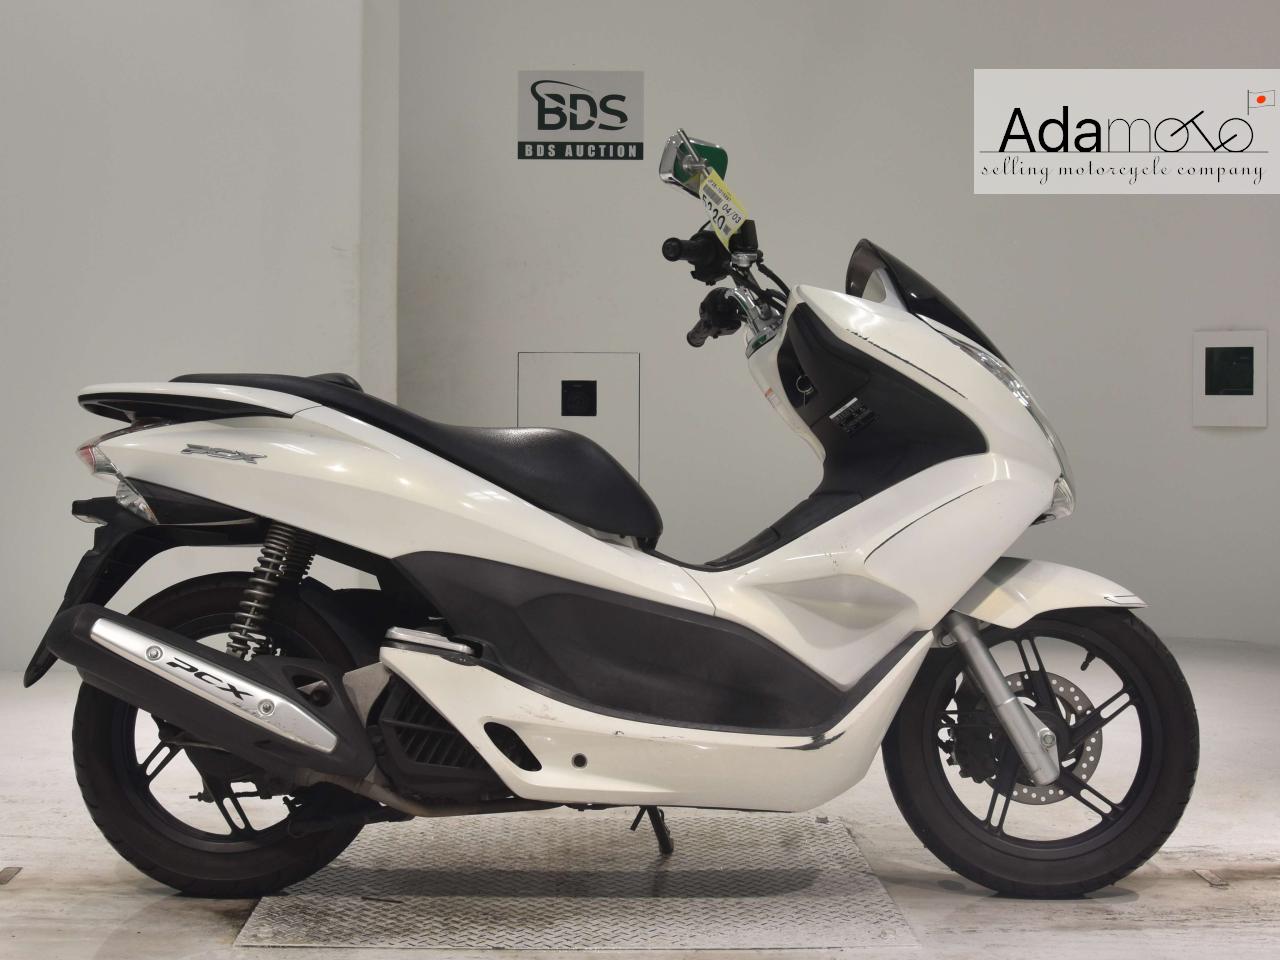 Honda PCX125 - Adamoto - Motorcycles from Japan